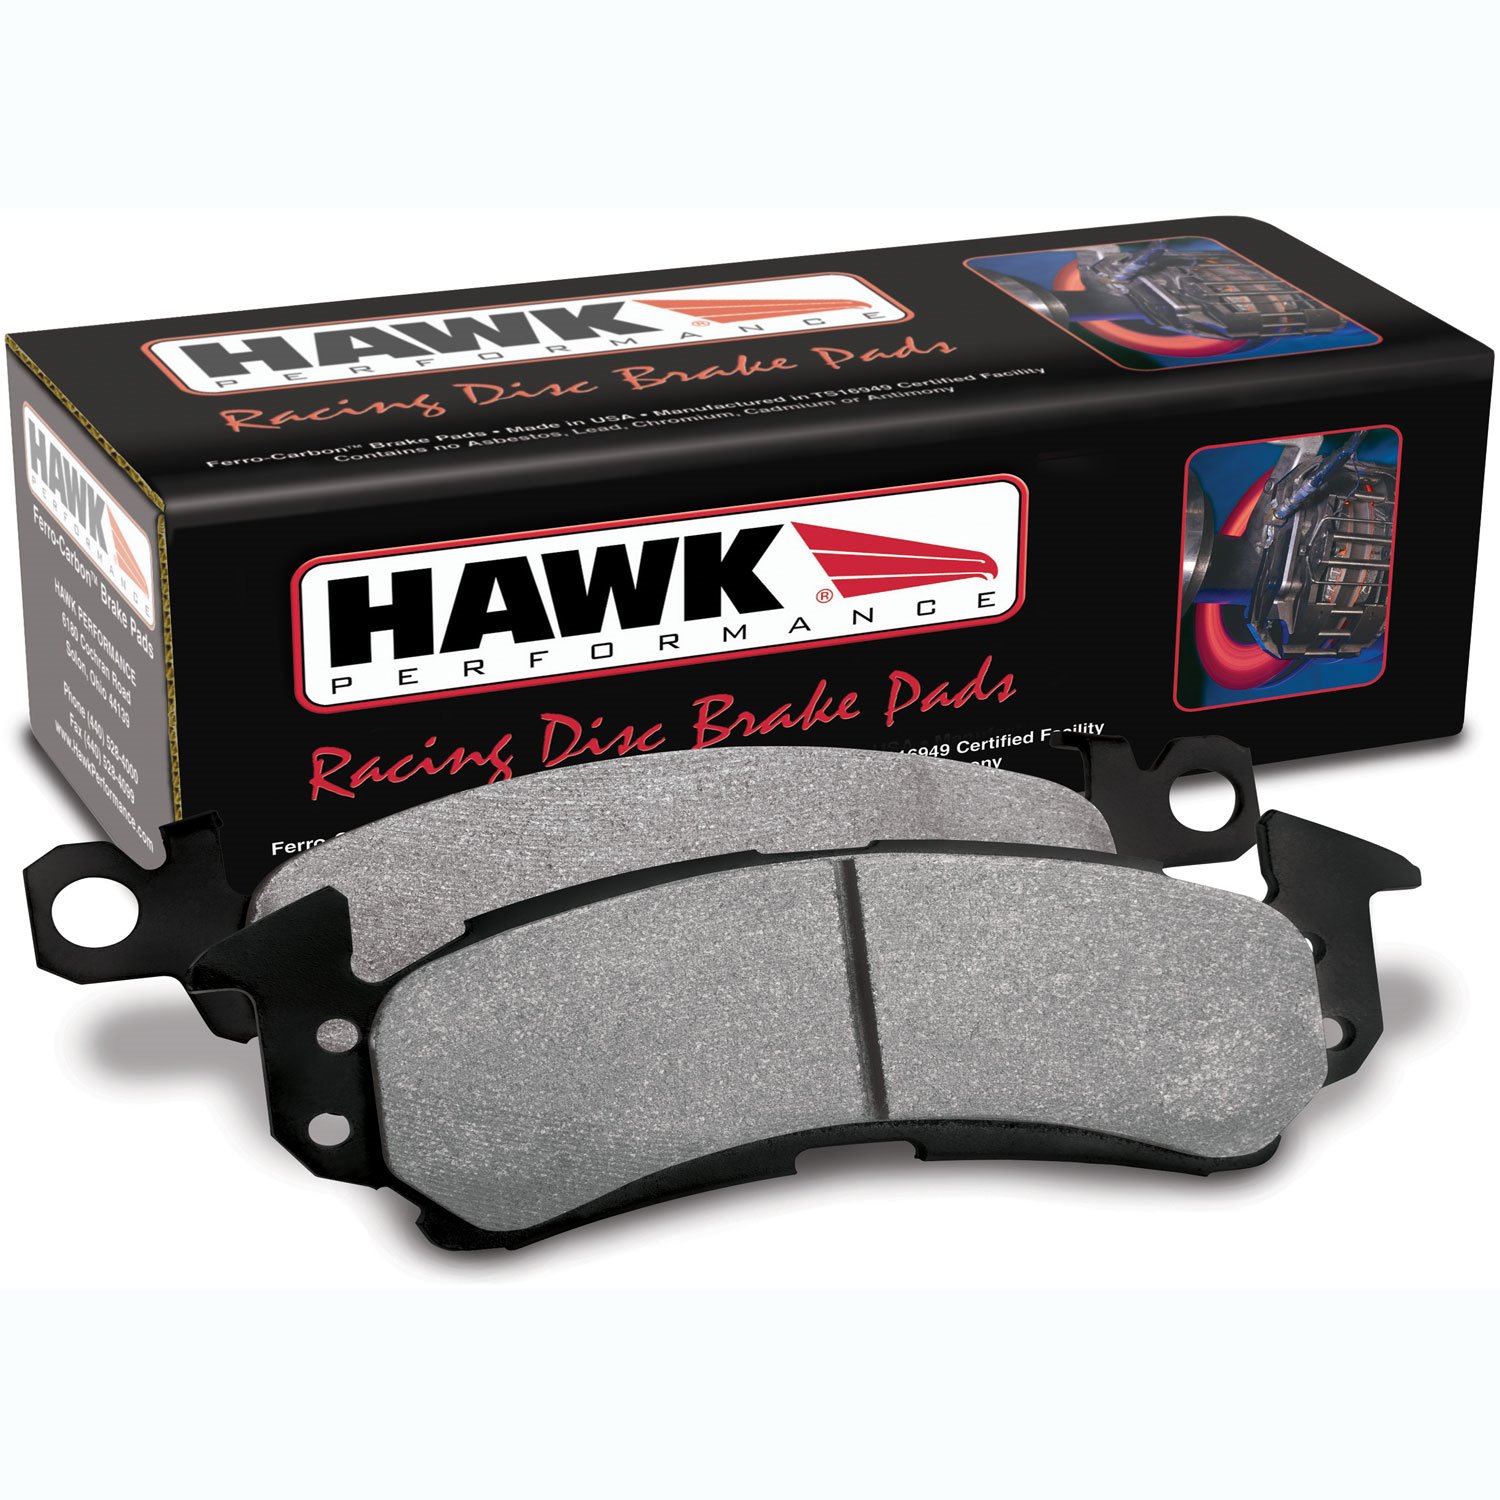 Disc Brake Pad HT-10 w/0.572 Thickness